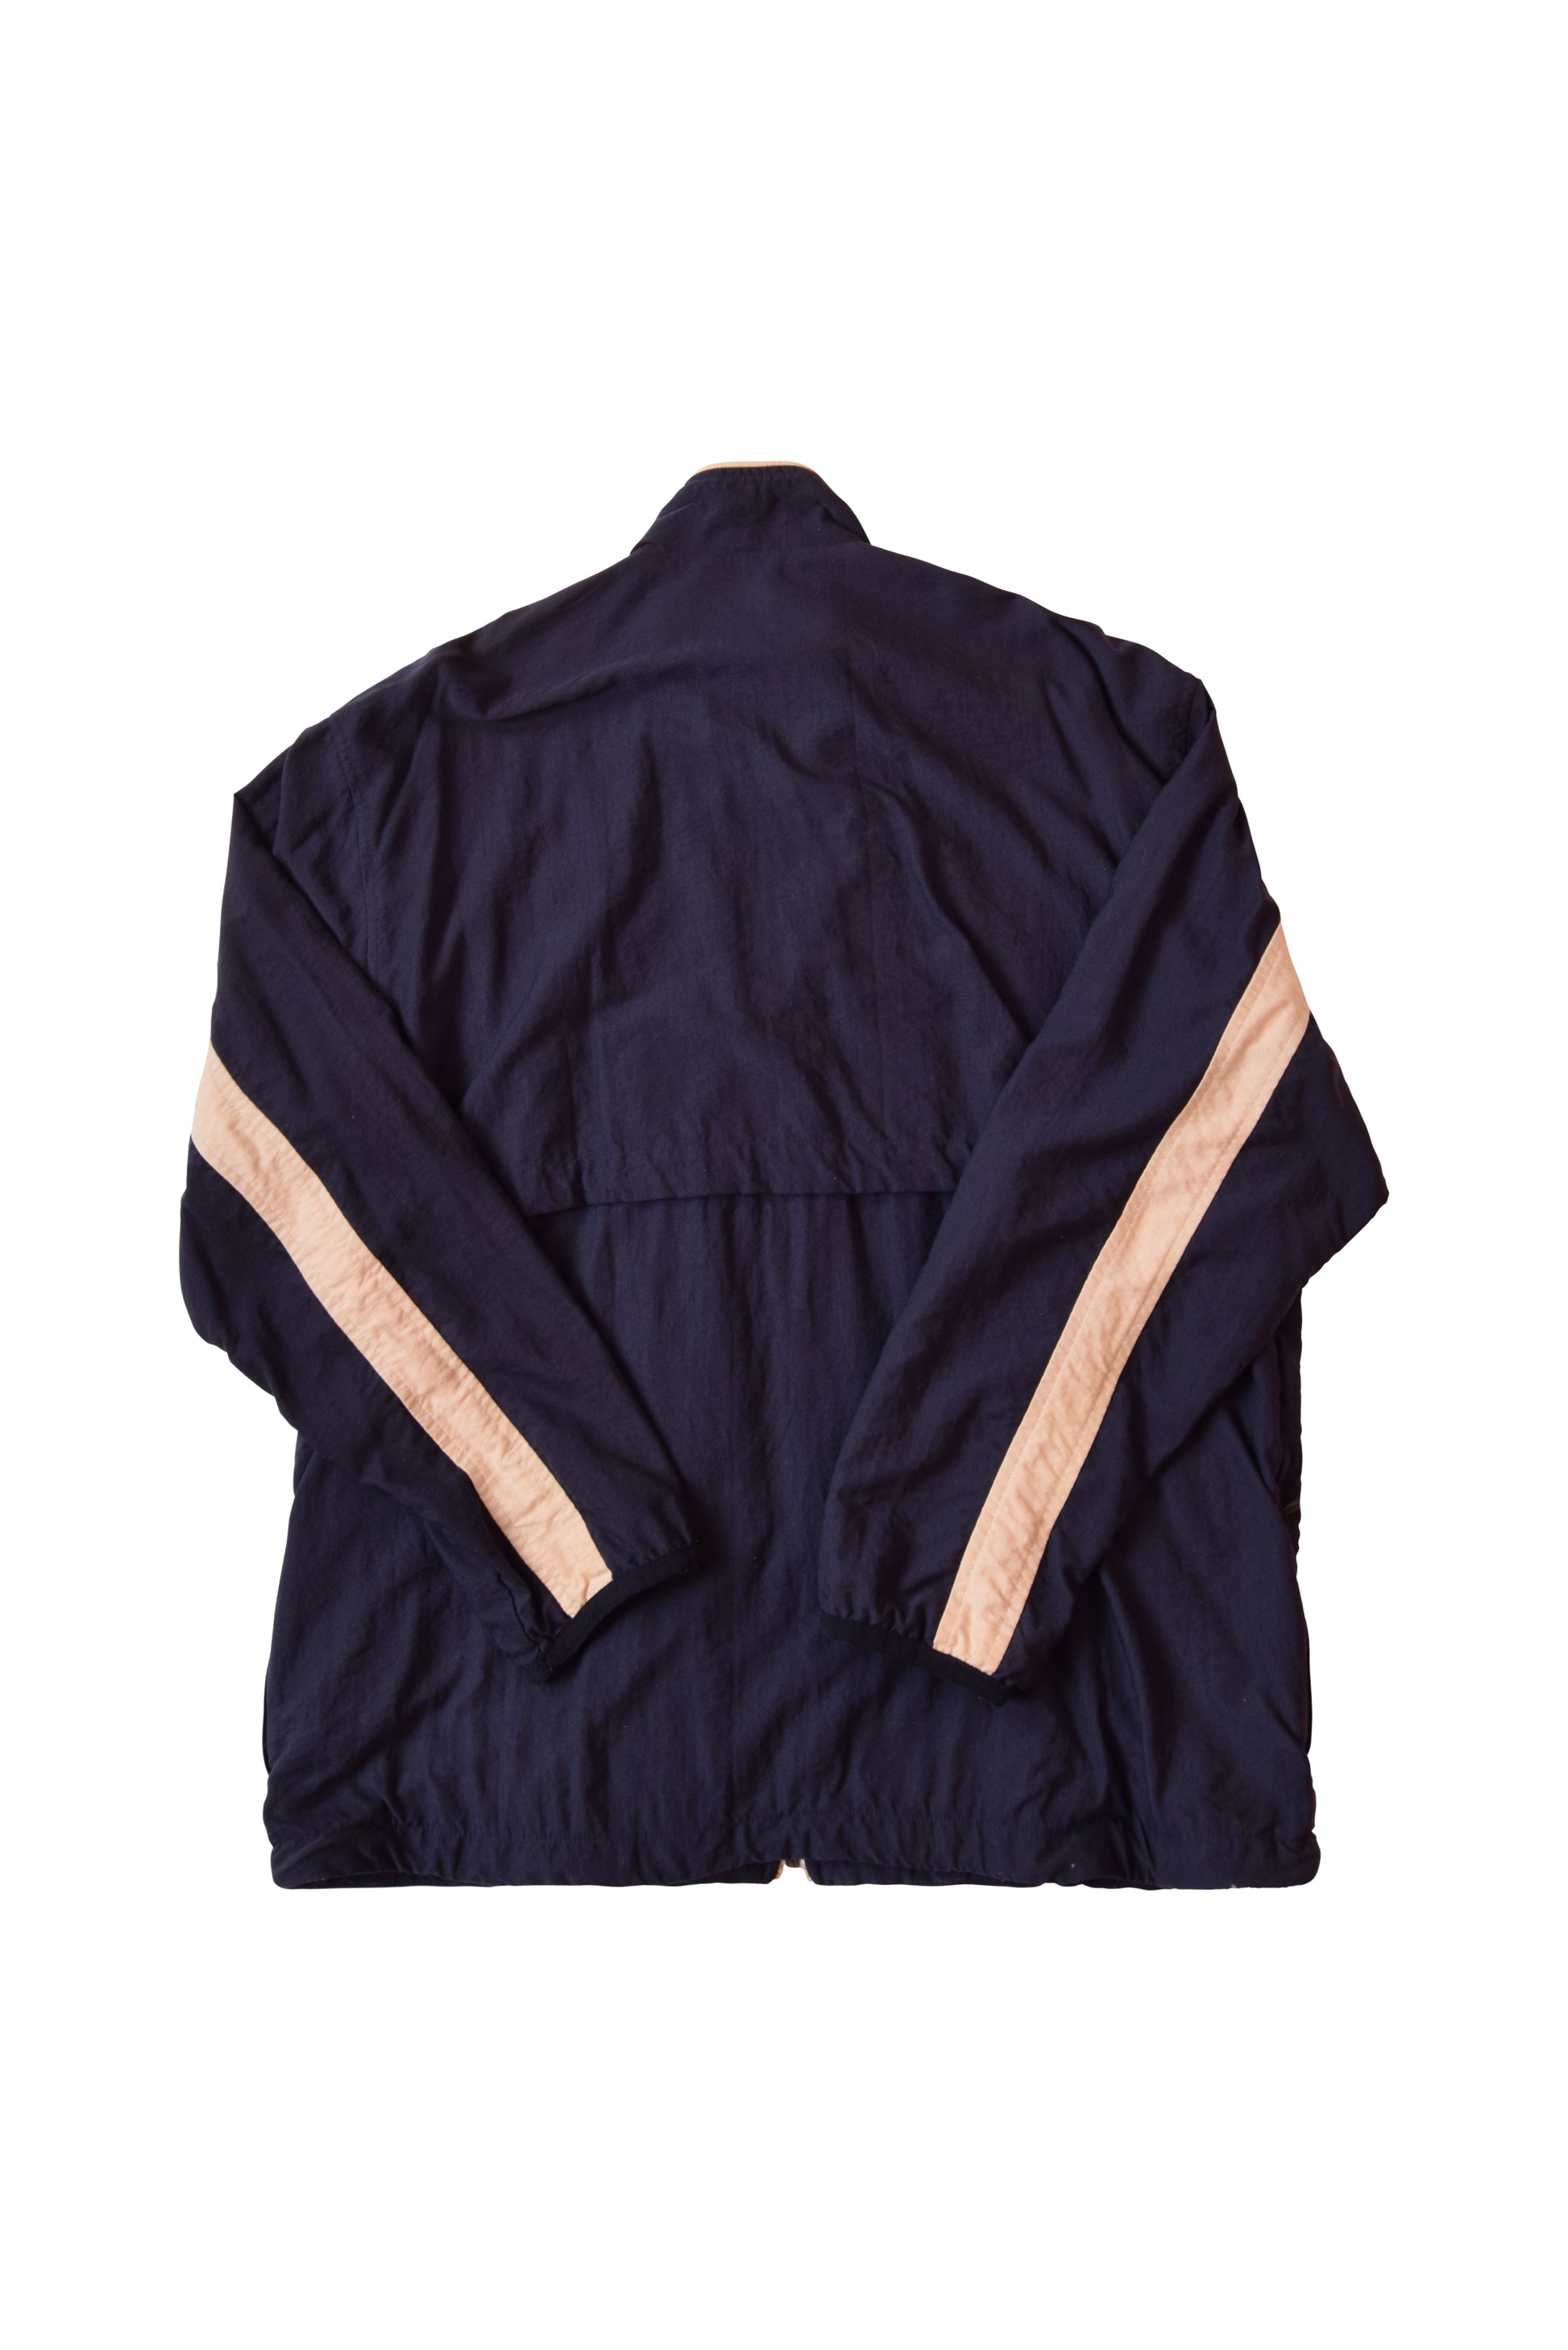 Vintage Nike Tennis 90's Jacket / Shell Size L-XL